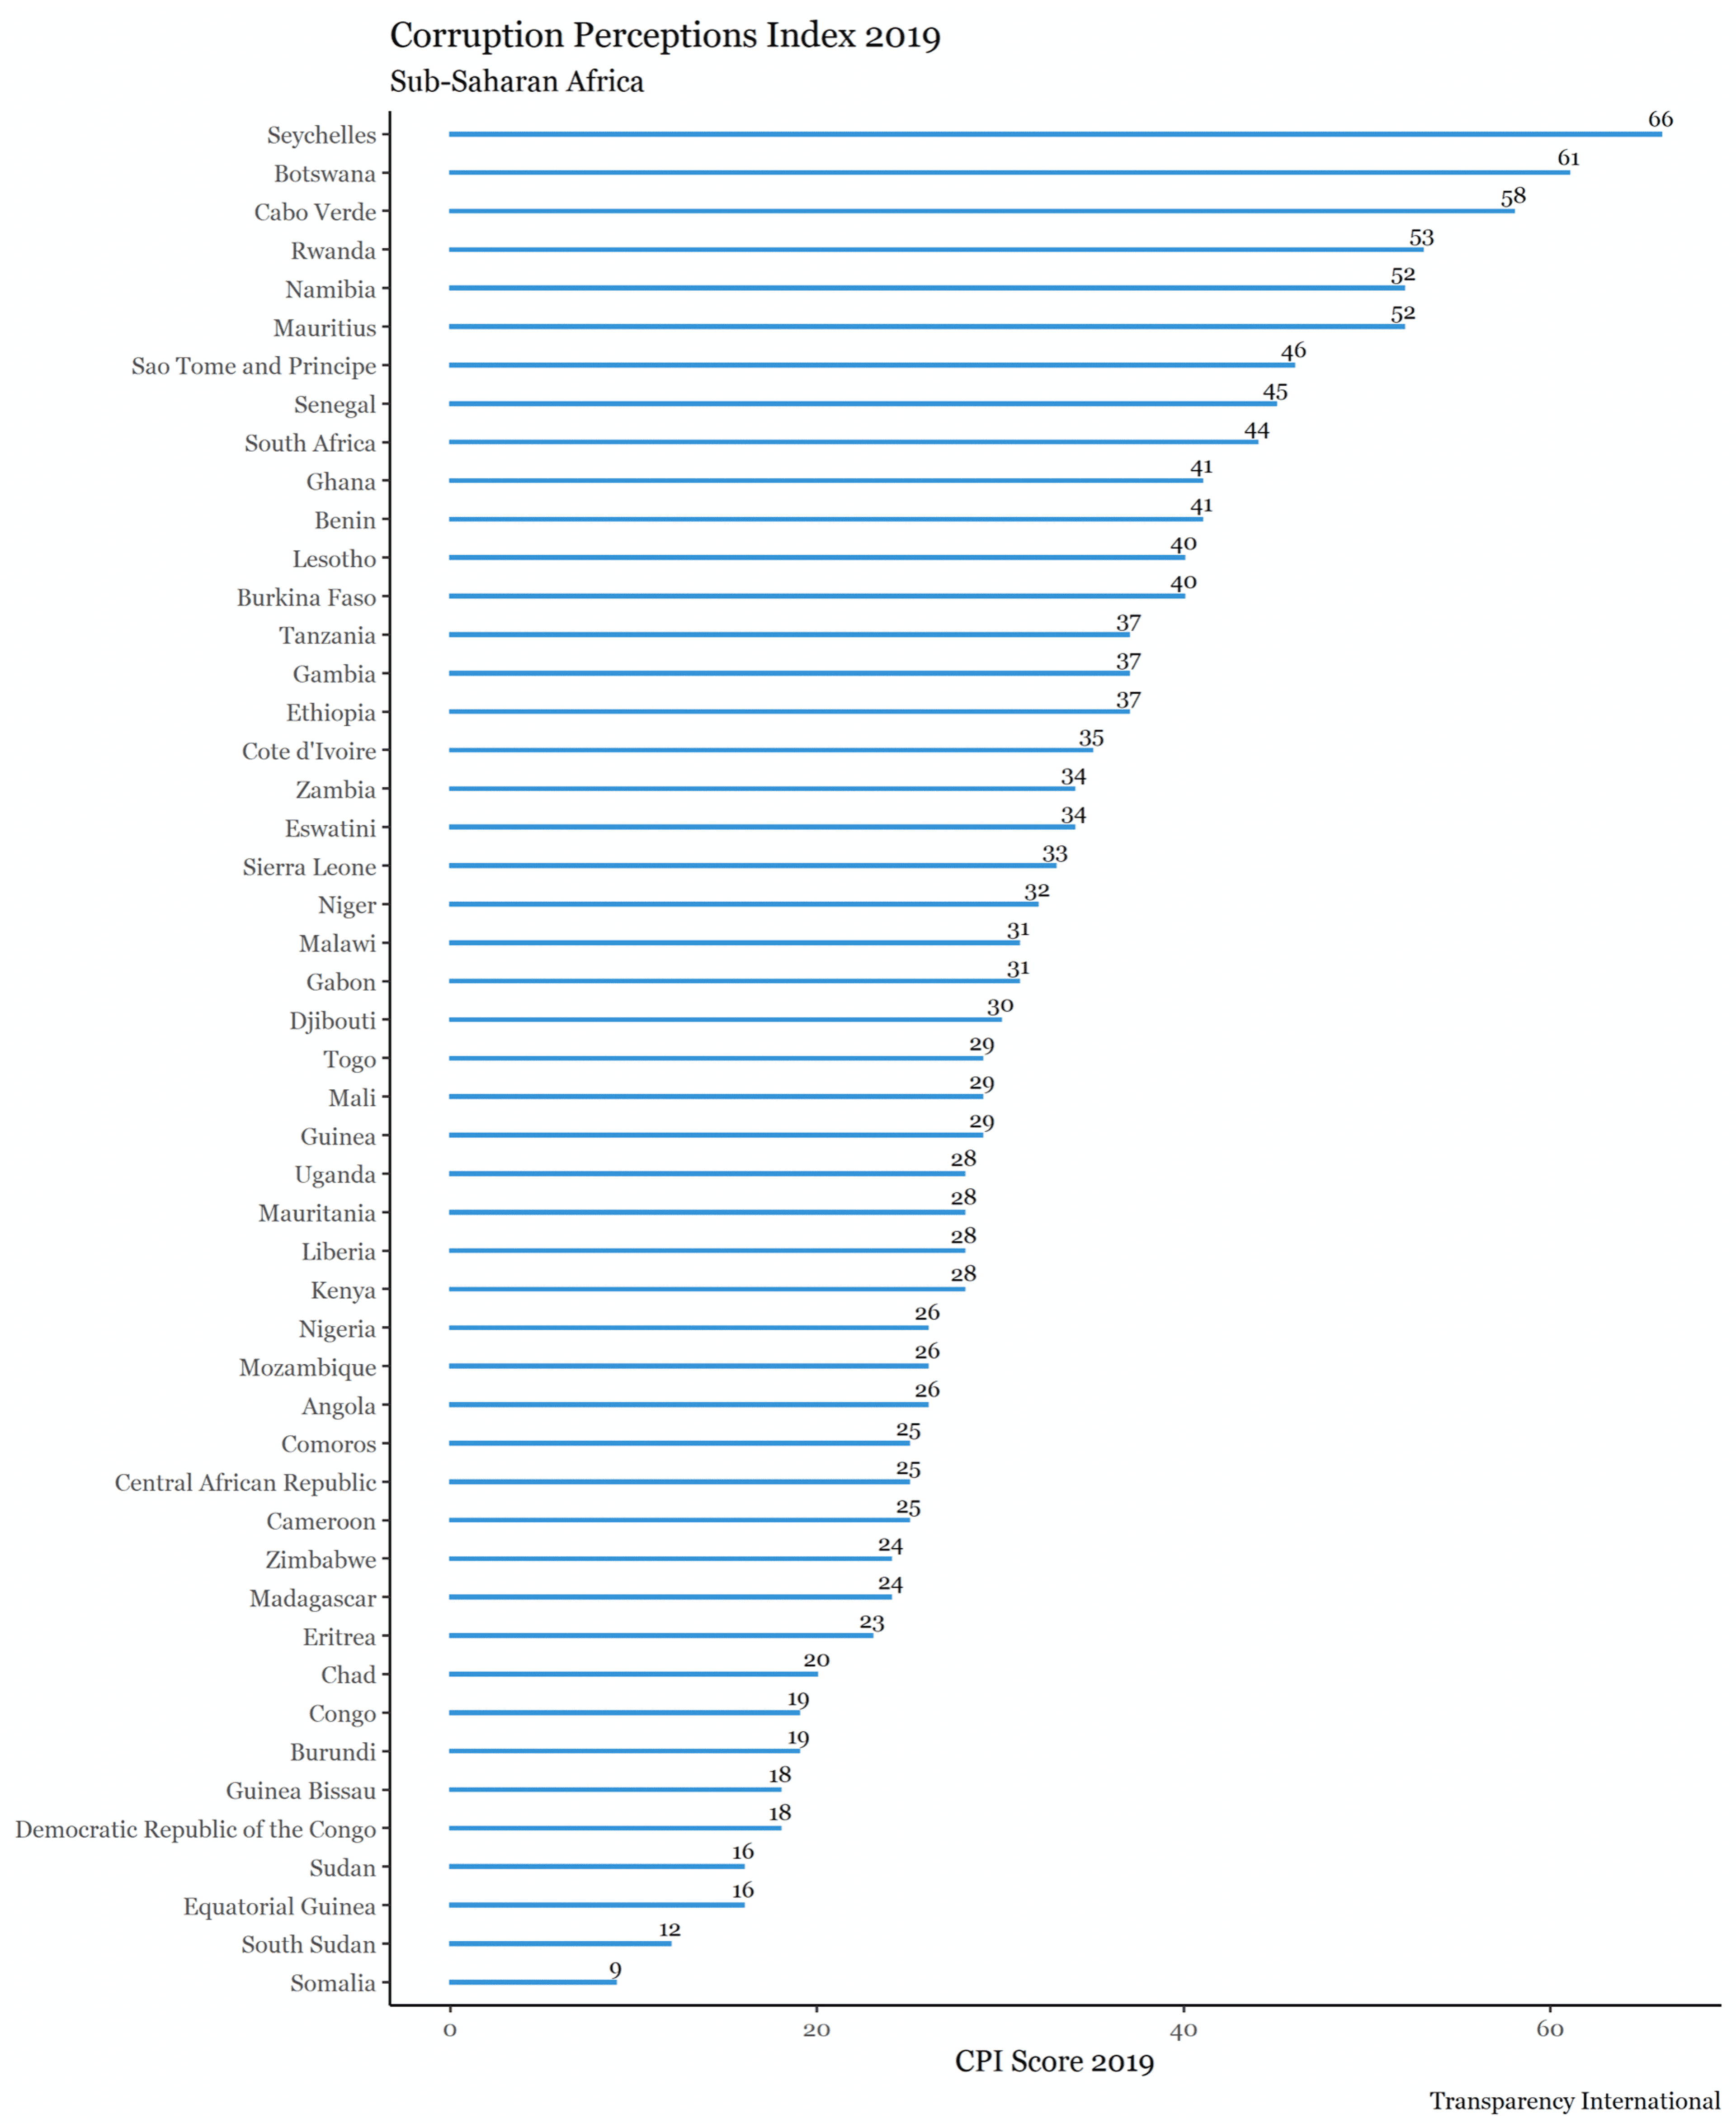 List of sub-Saharan countries and their CPI score